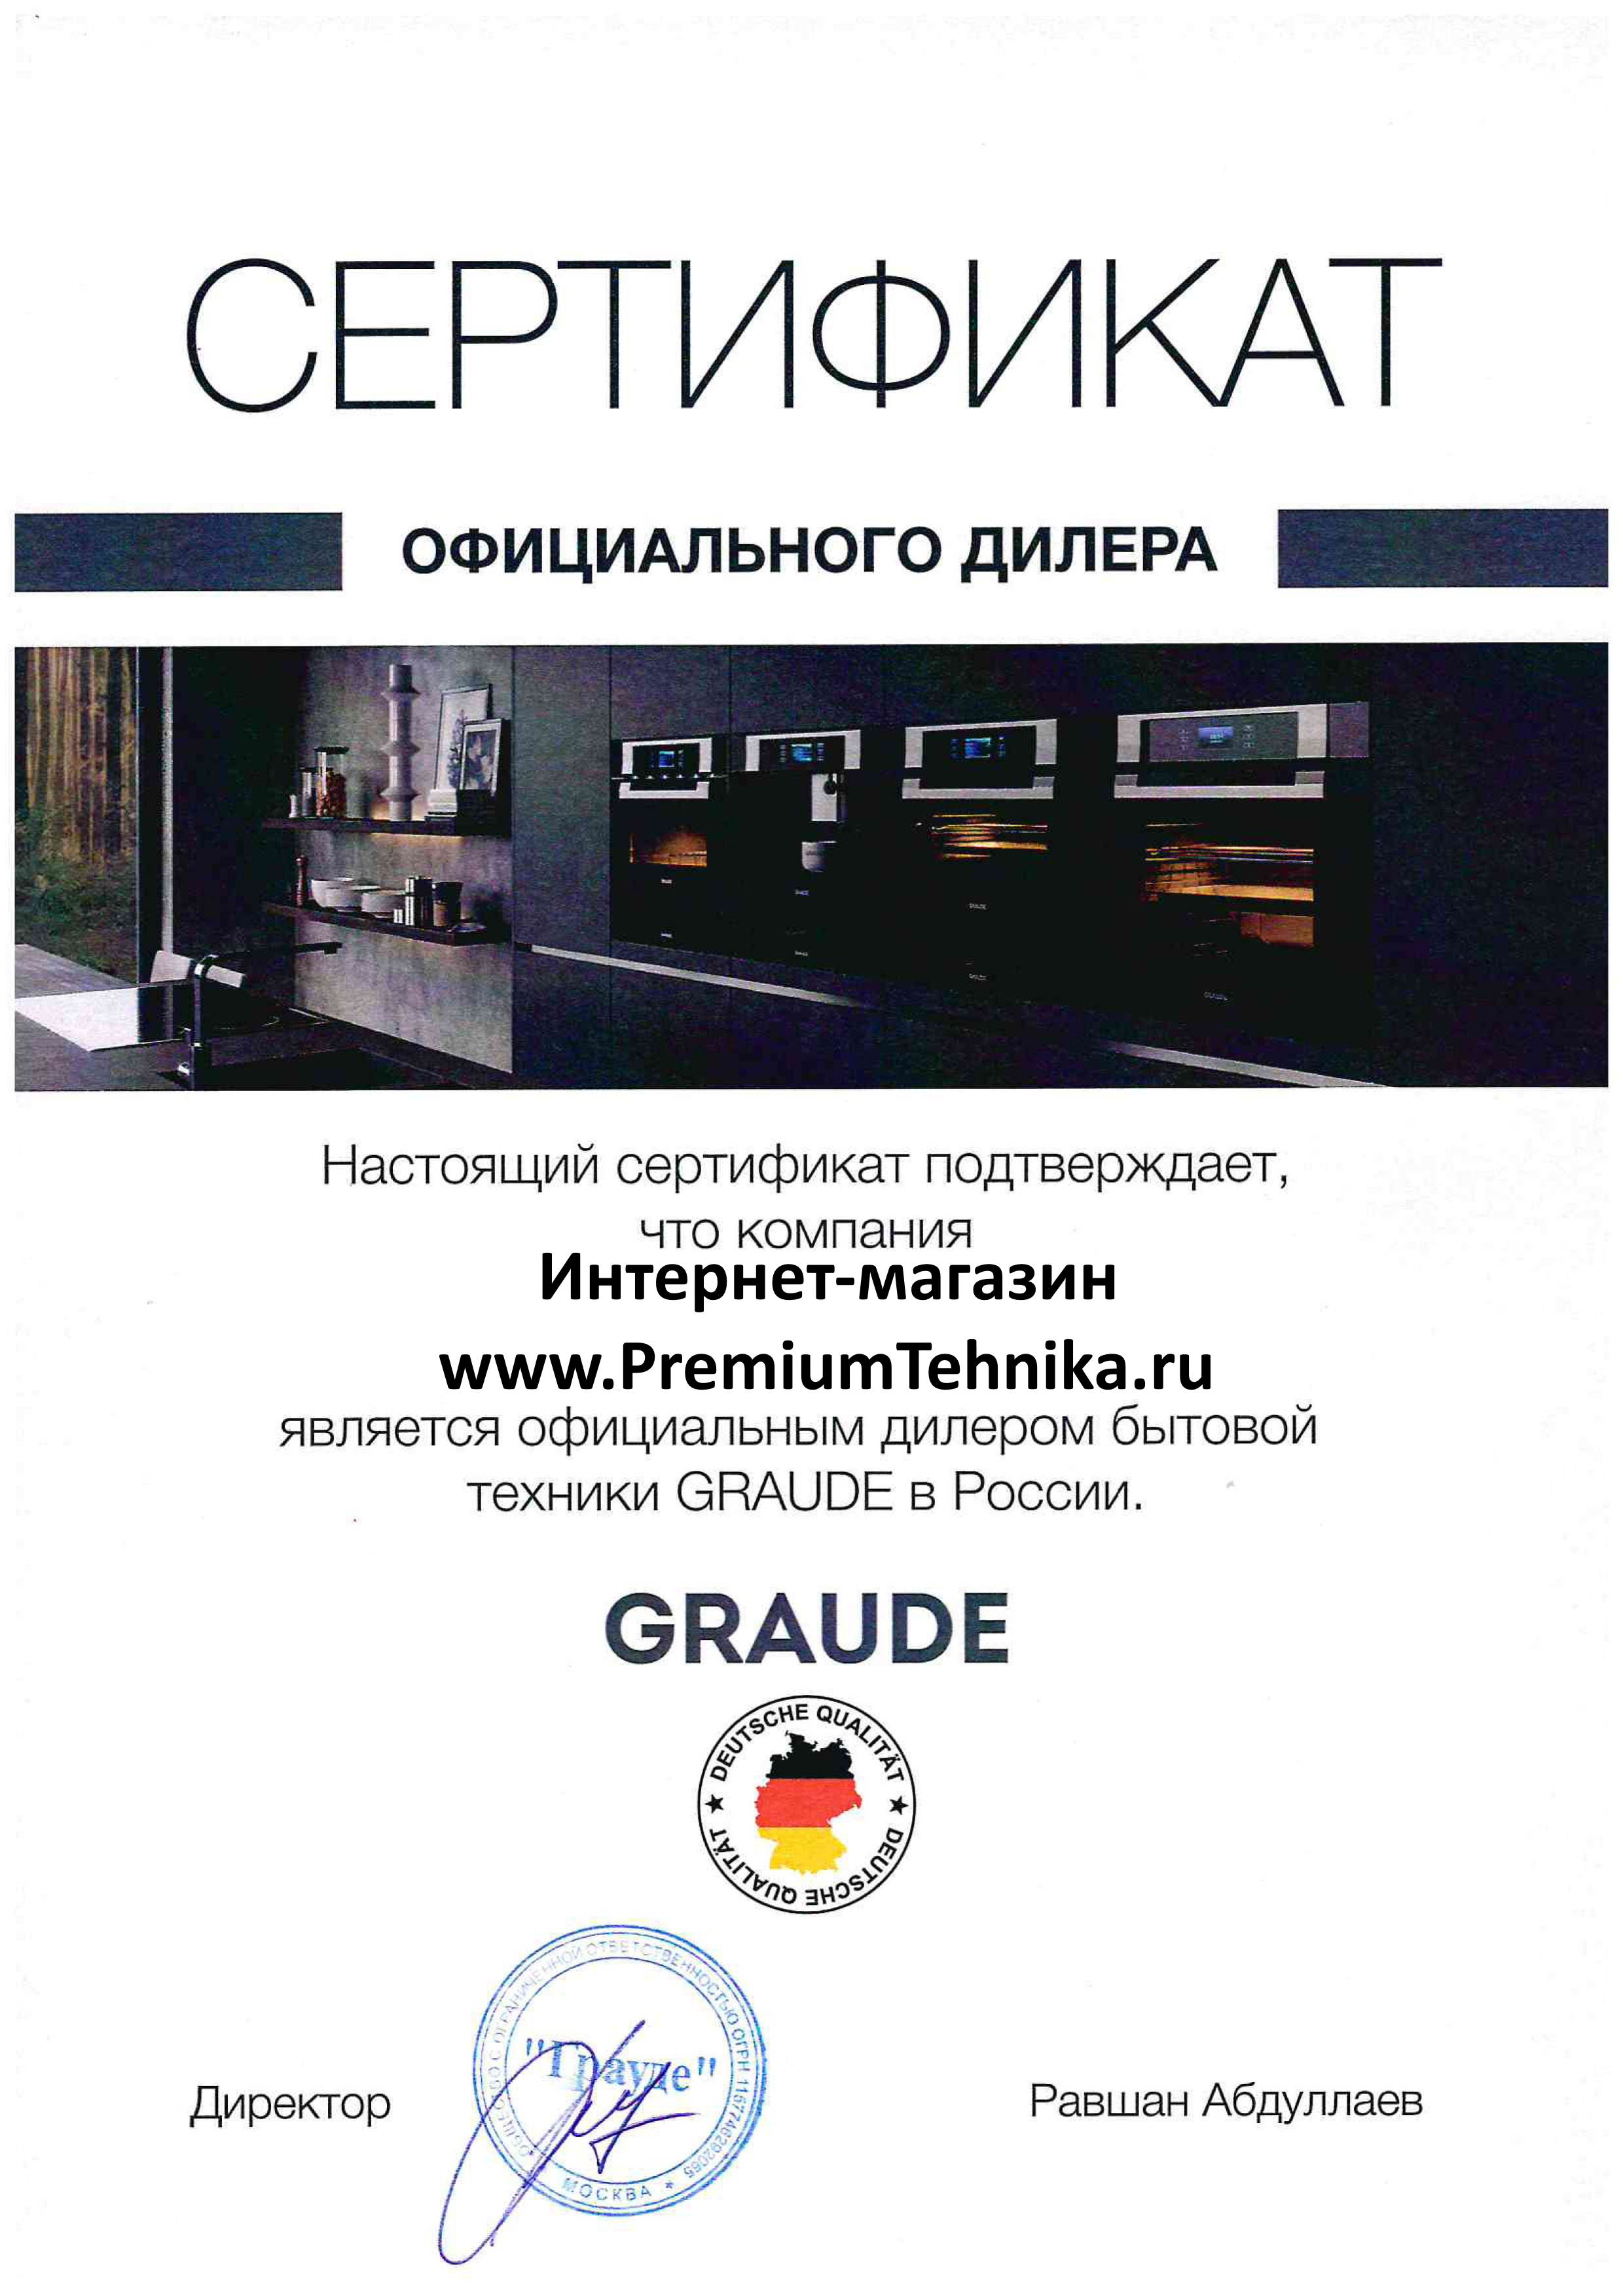 GRAUDE certificate